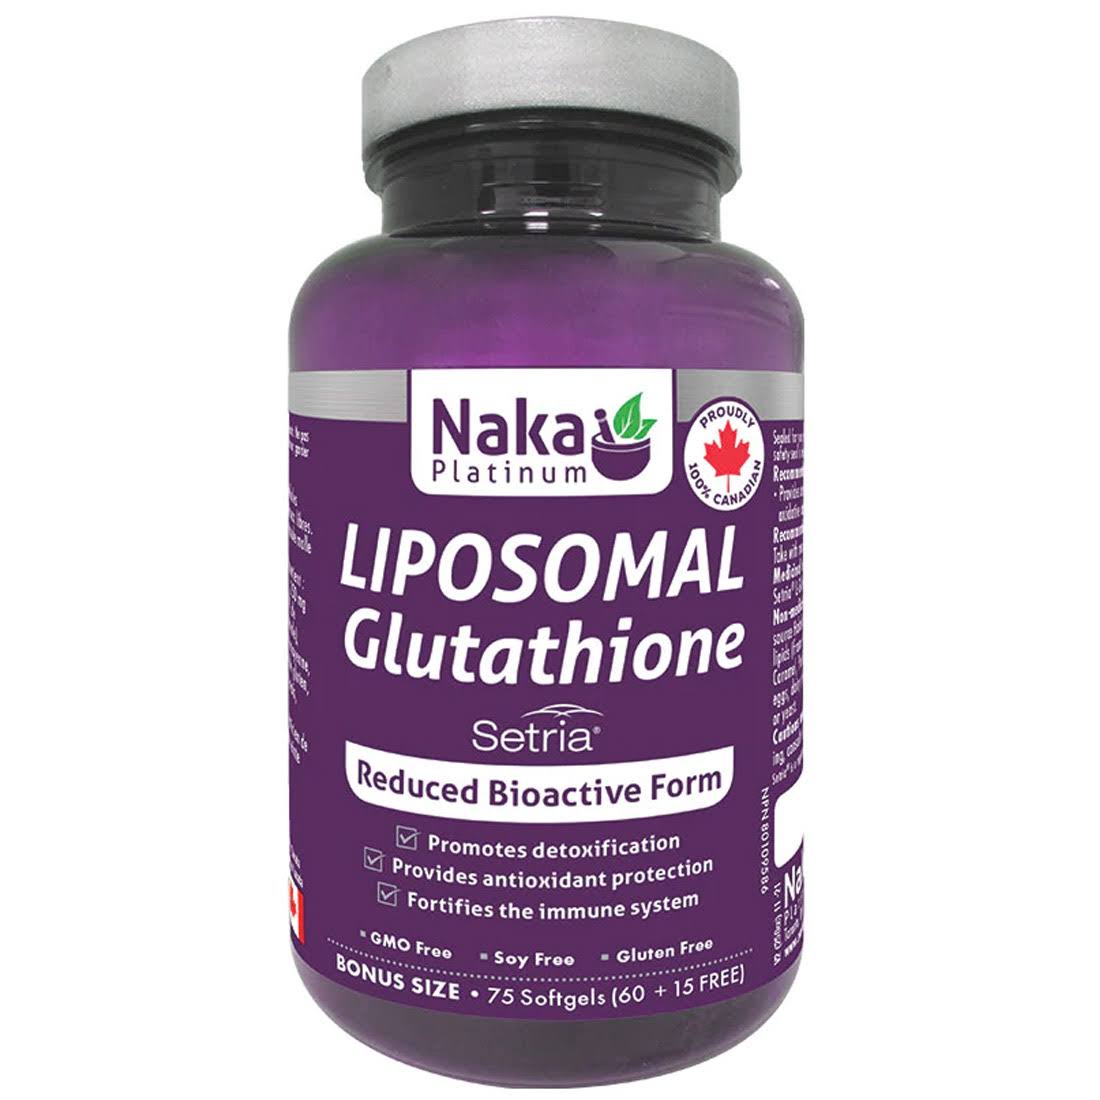 Naka Platinum Liposomal Glutathione 75 Softgels